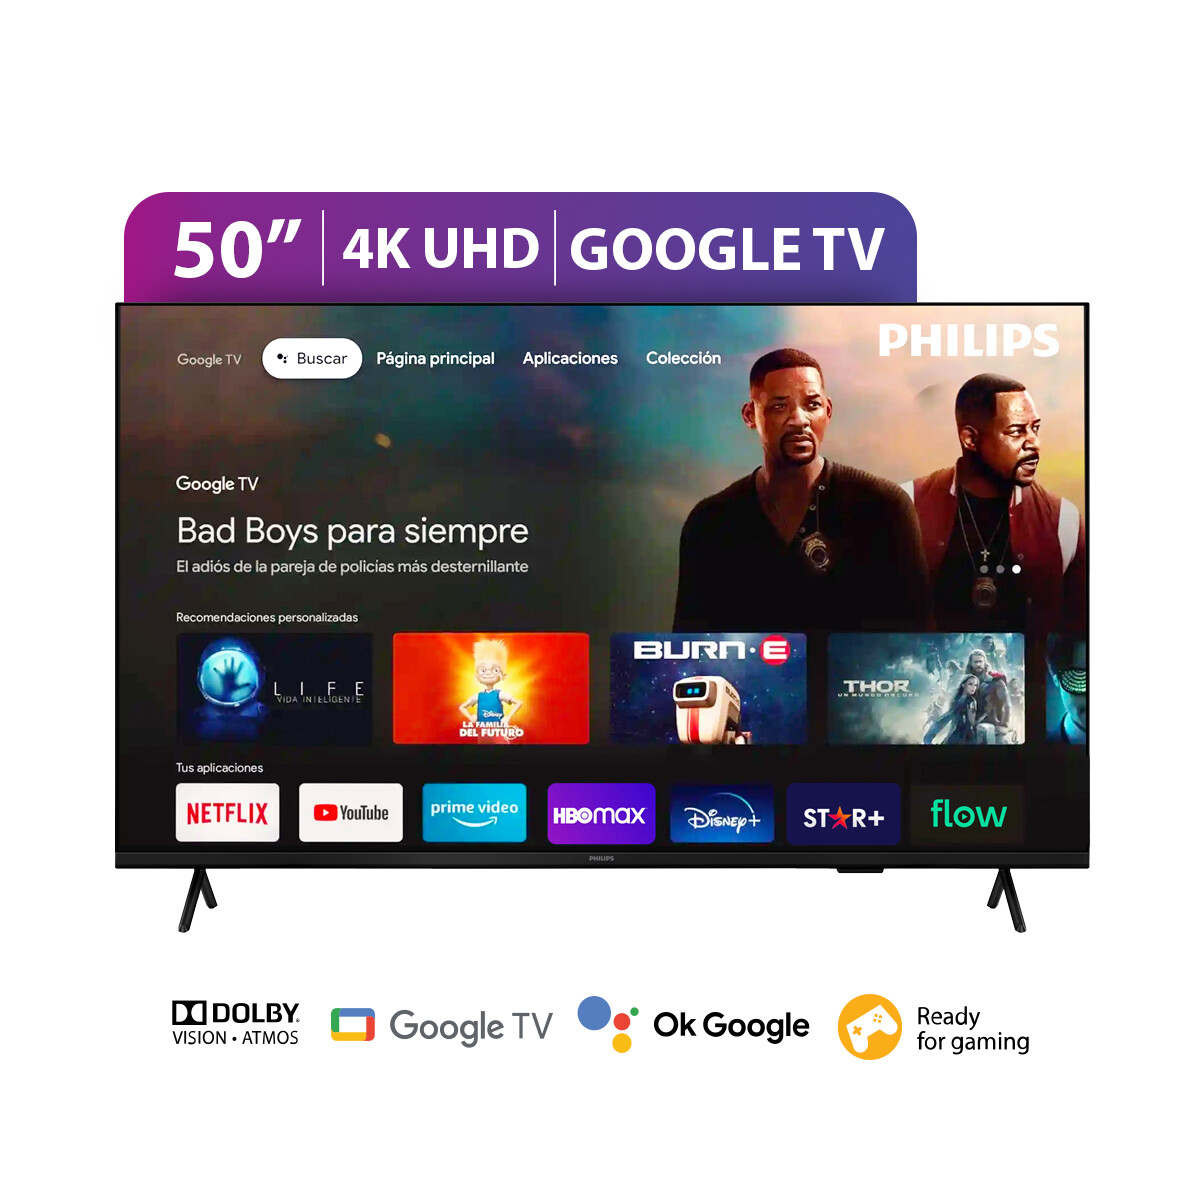 TV Philips 50" Google TV 4K UHD 